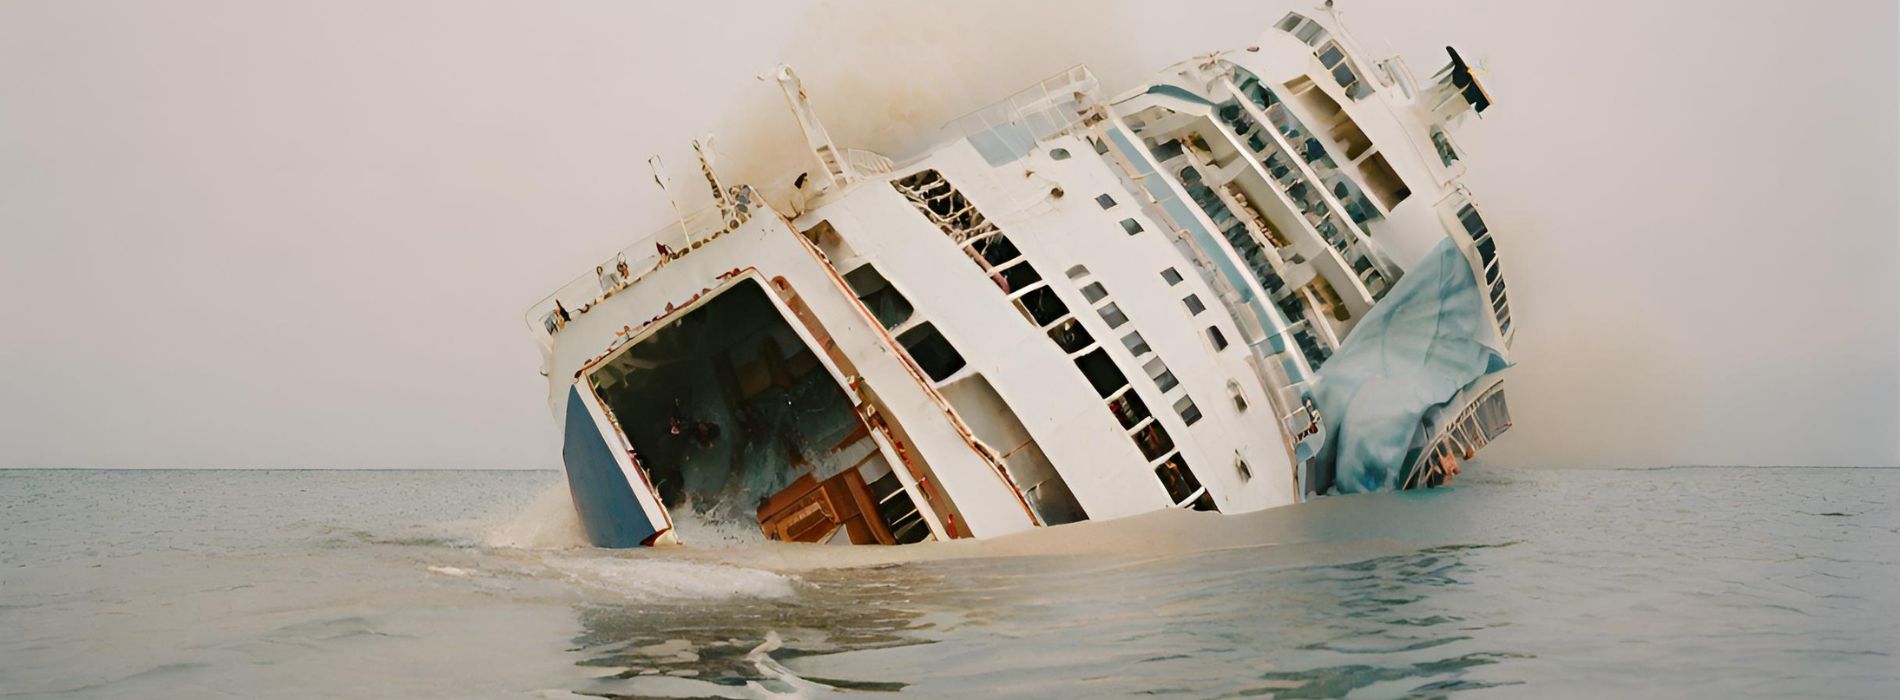 How often do cruise ships sink? - Madeinsea©